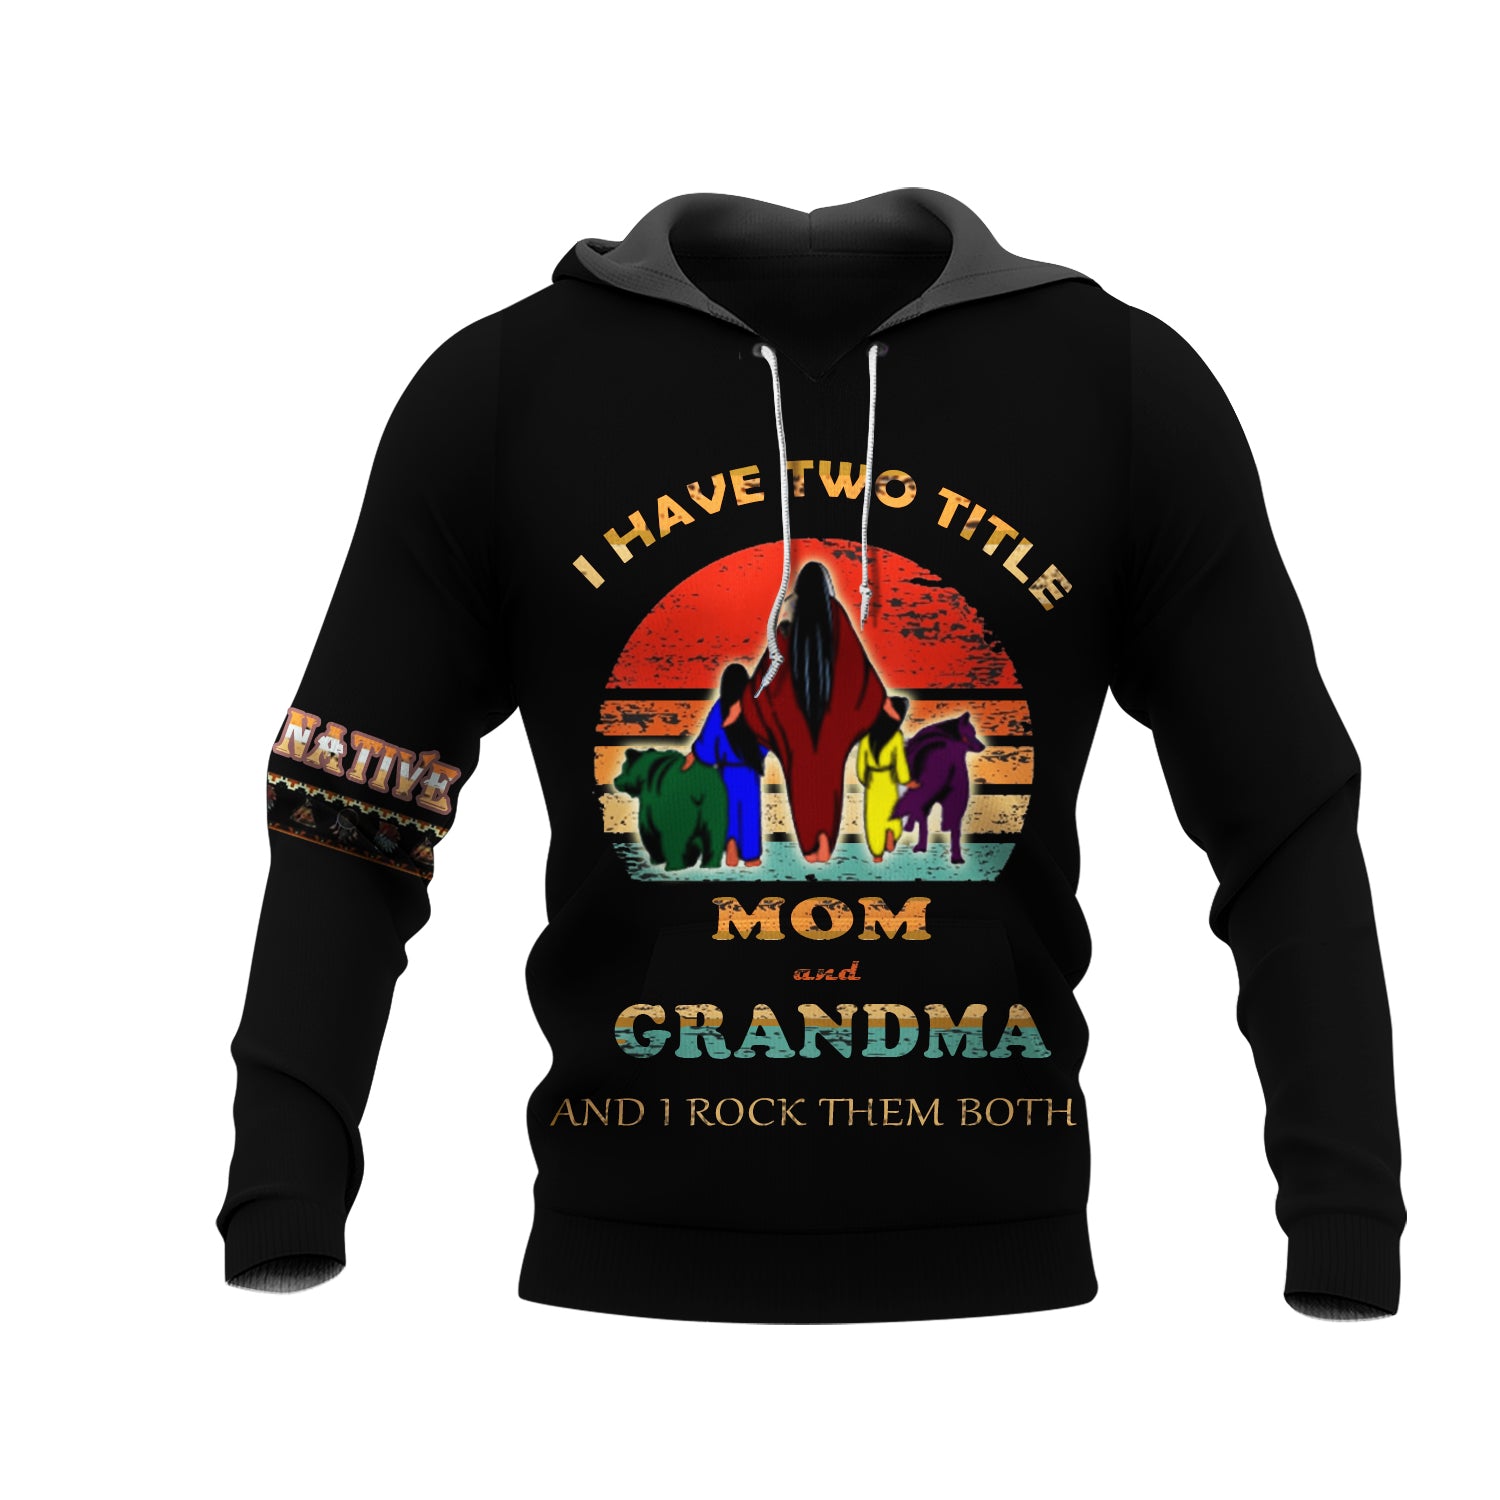 Powwow Store hd1111 mom and grandma 3d hoodie